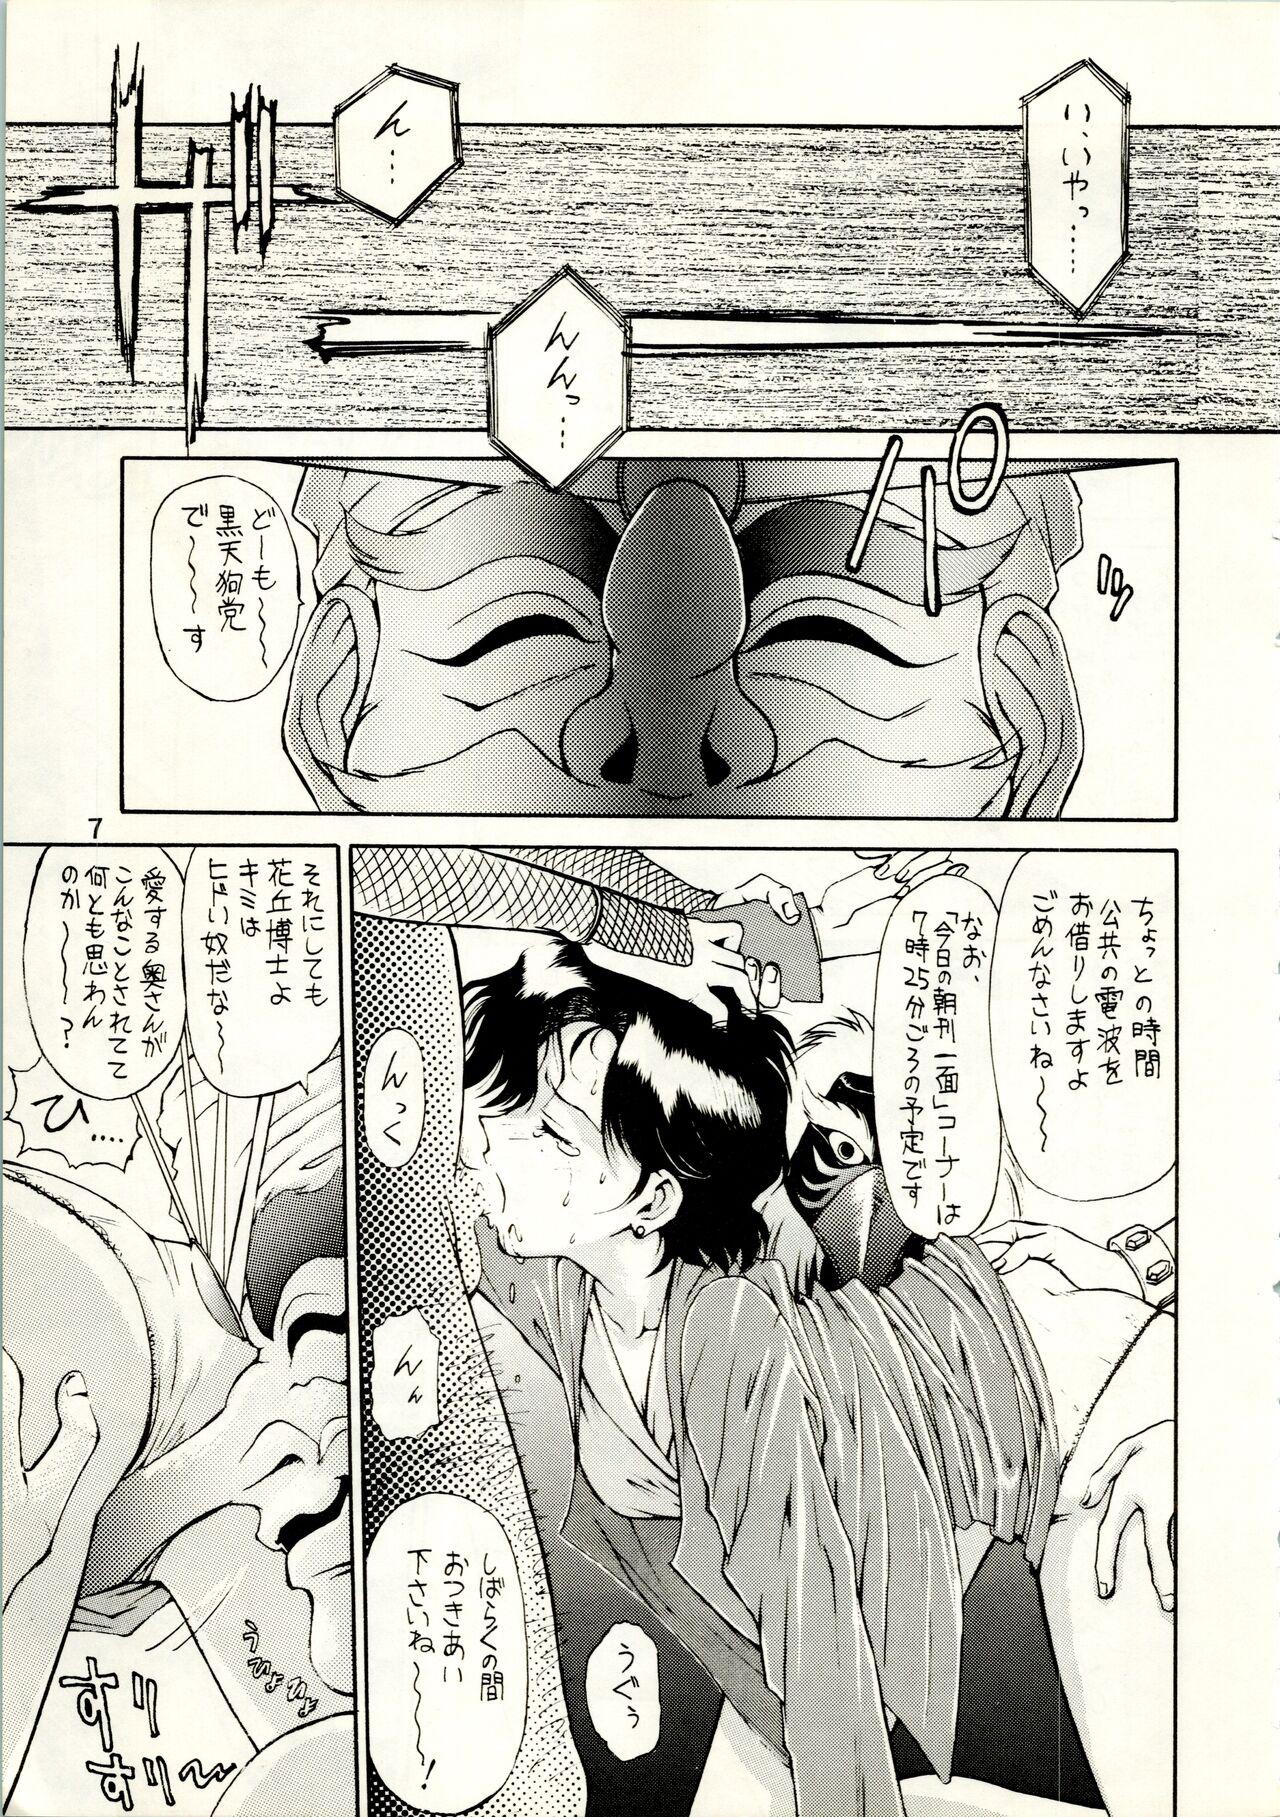 Bulge POTATO MASHER 8 - Tobe isami | soar high isami Underwear - Page 7